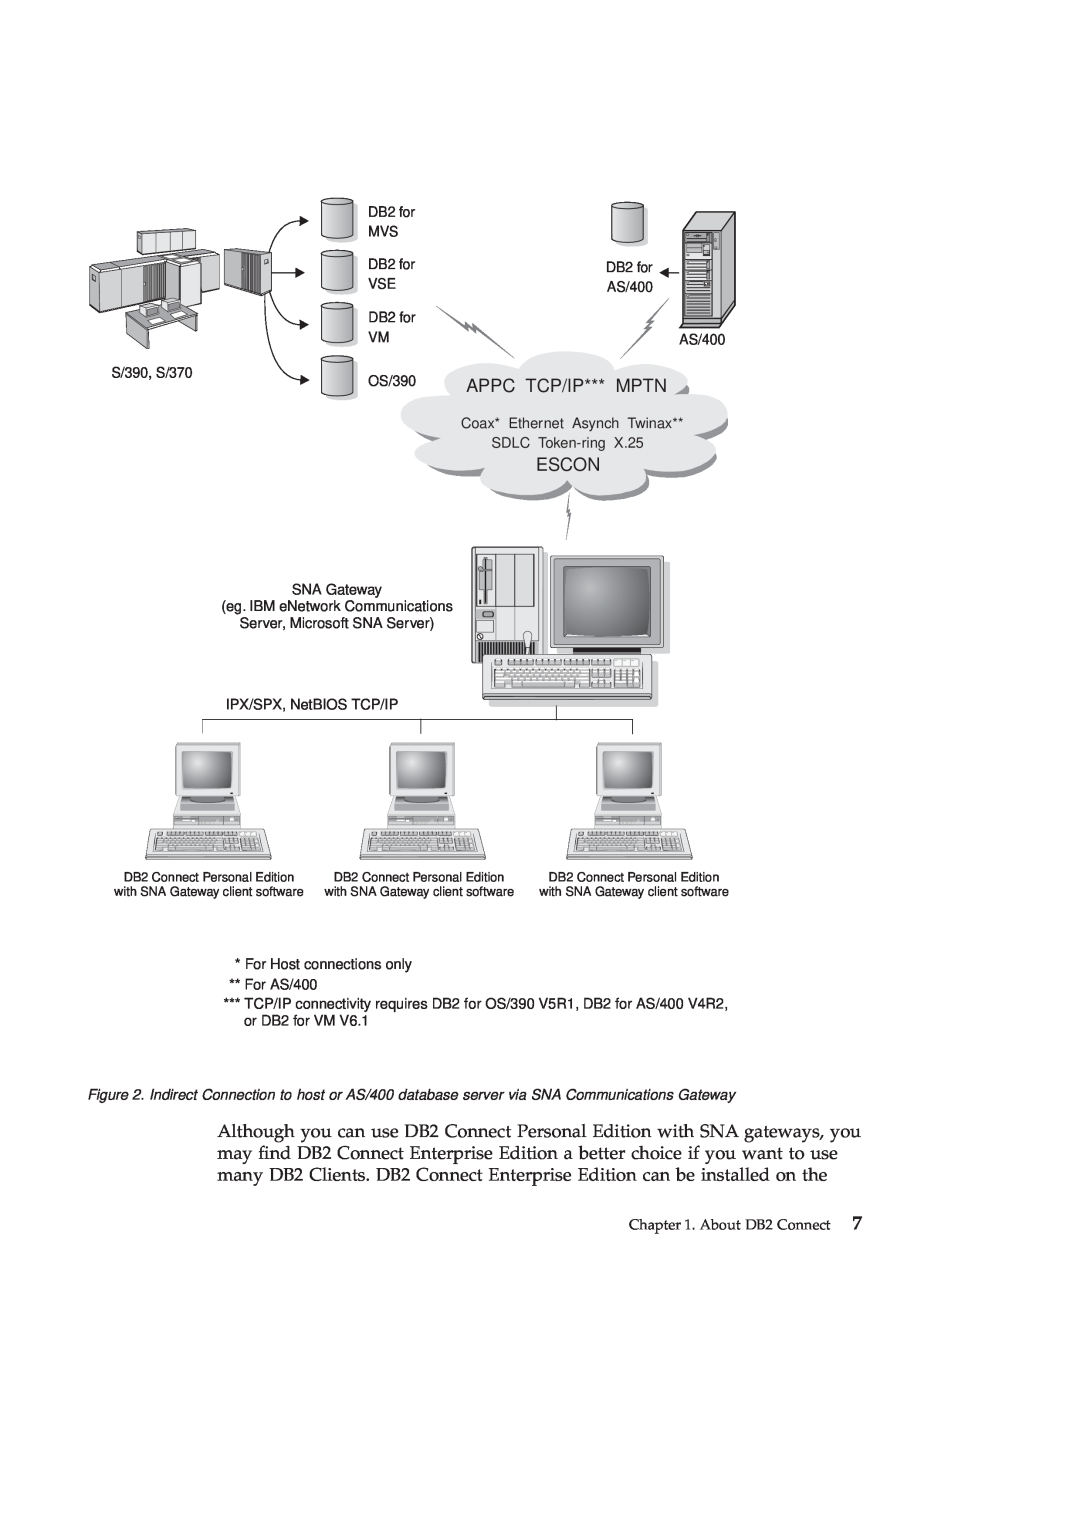 IBM GC09-2830-00 manual Escon, OS/390 APPC TCP/IP*** MPTN 